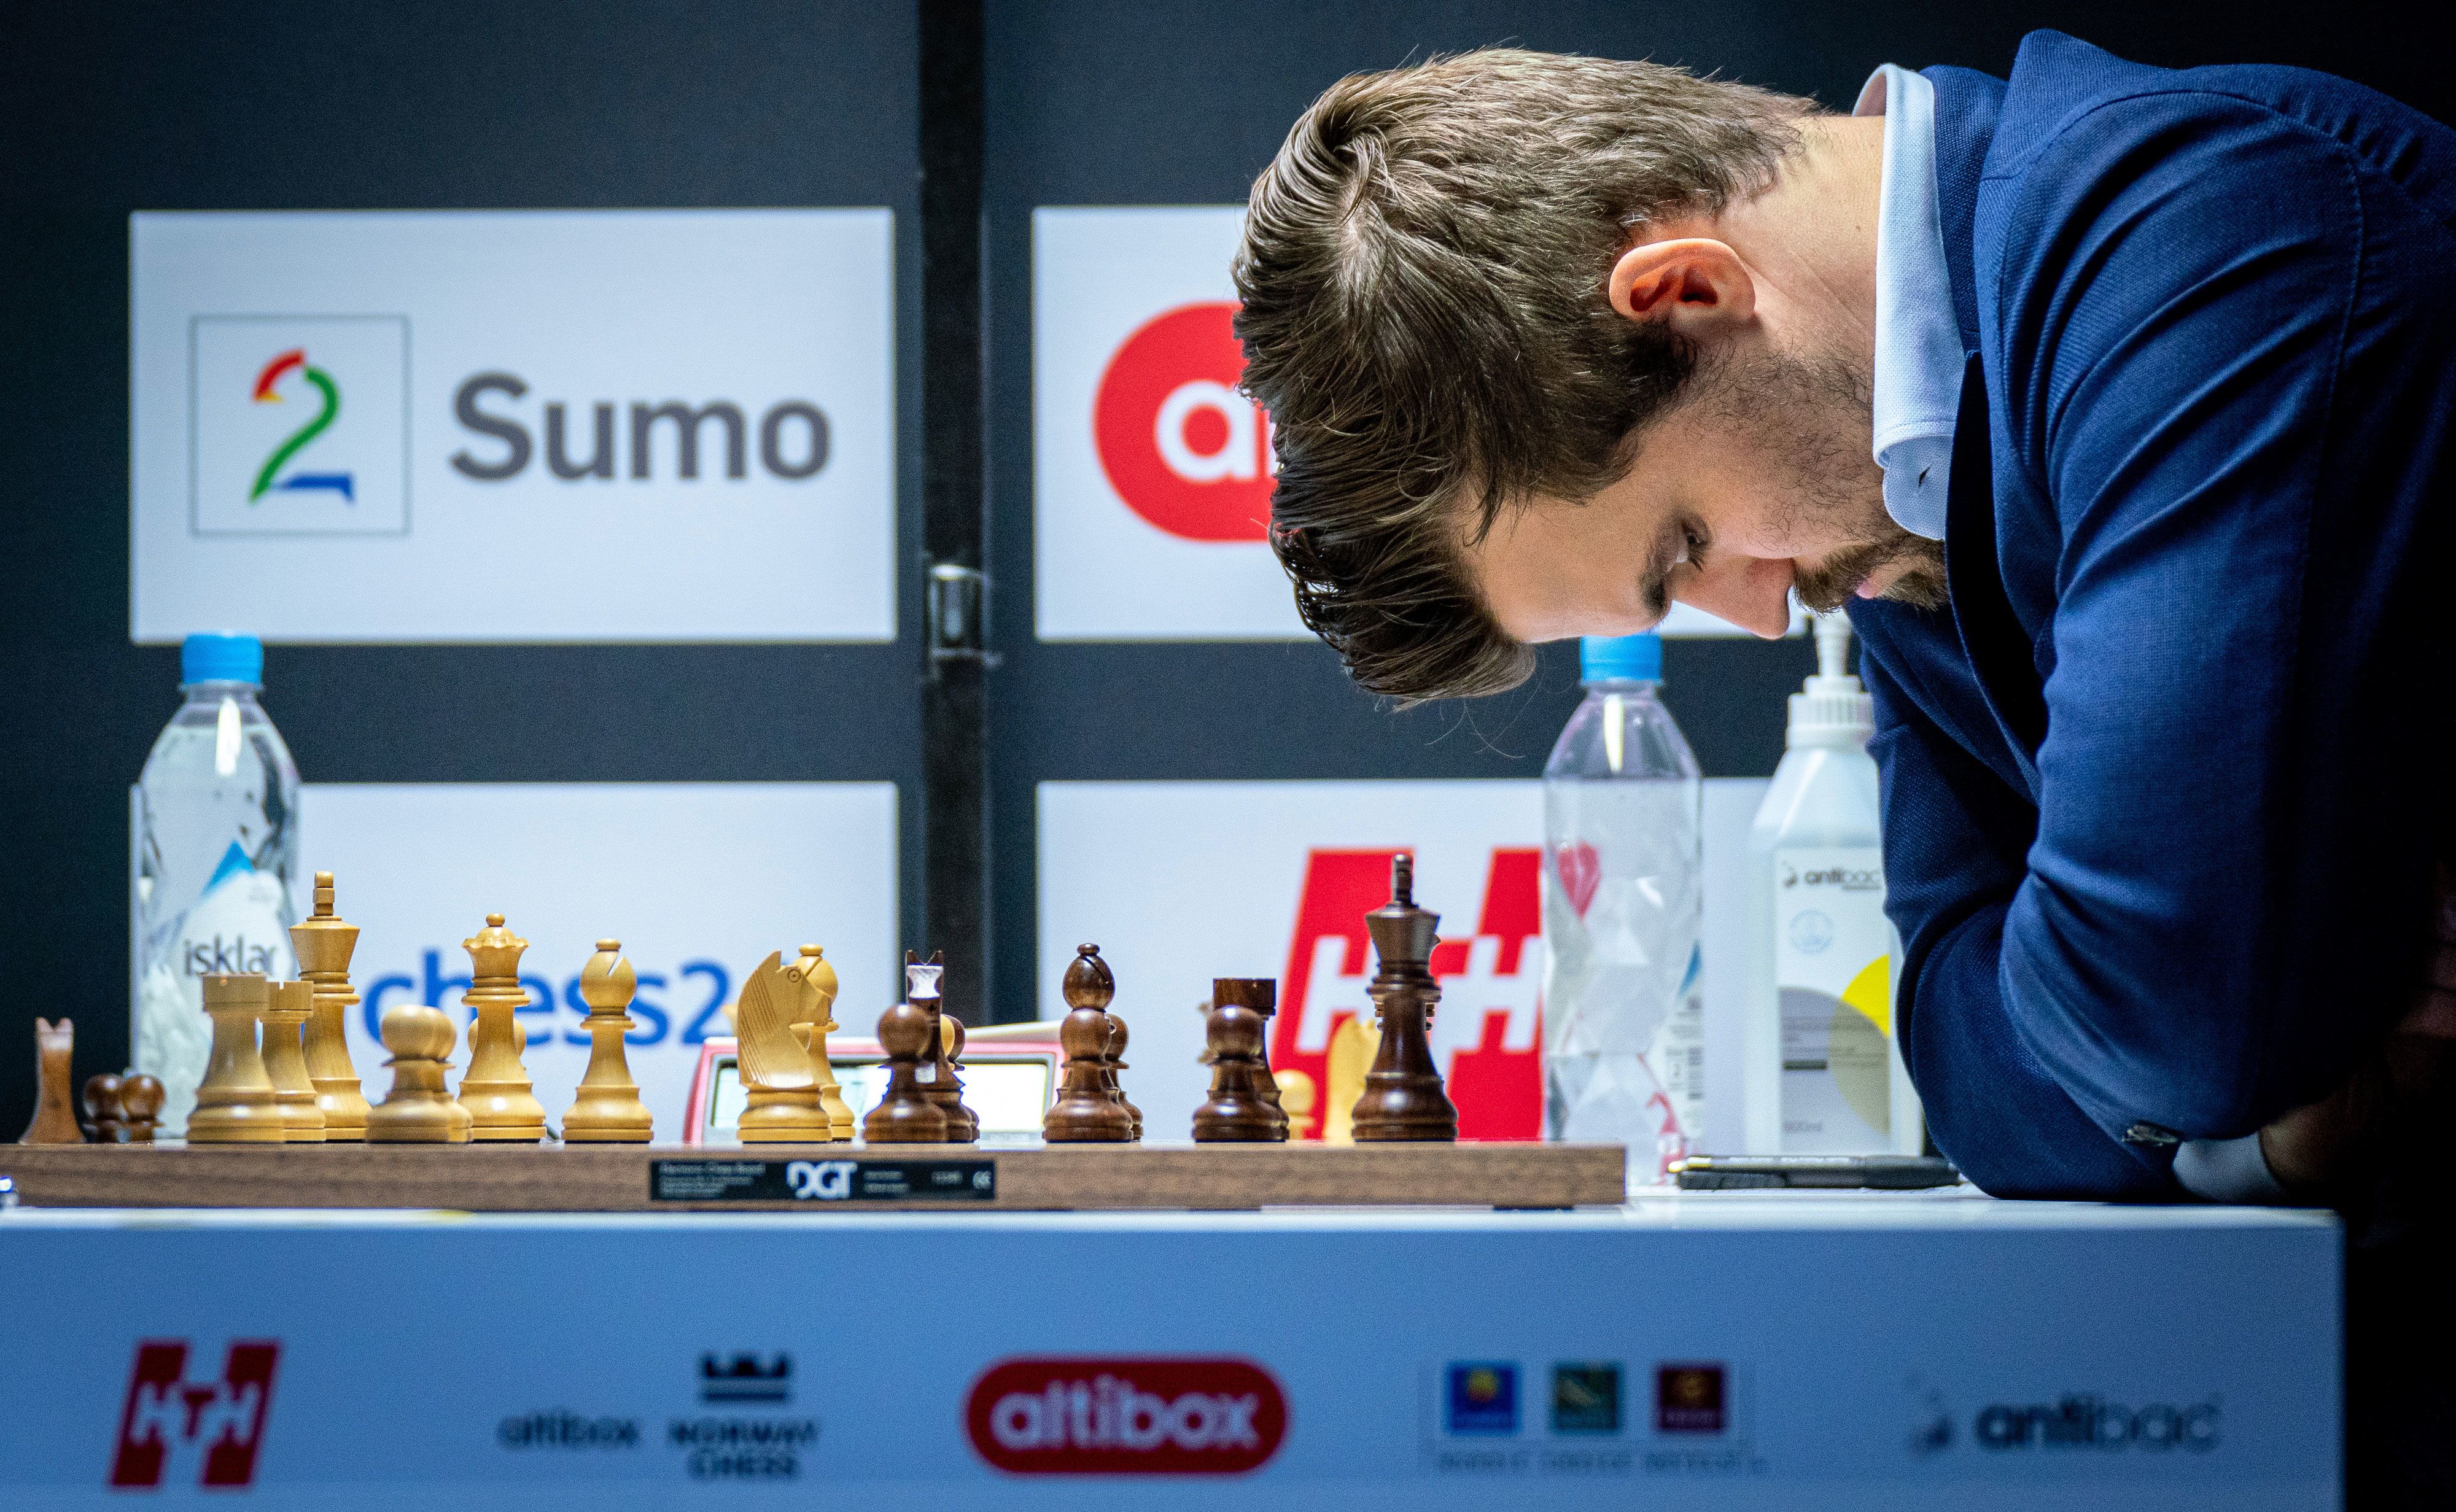 Jan-Krzysztof Duda halts Carlsen's hat-trick, wins Oslo Esports